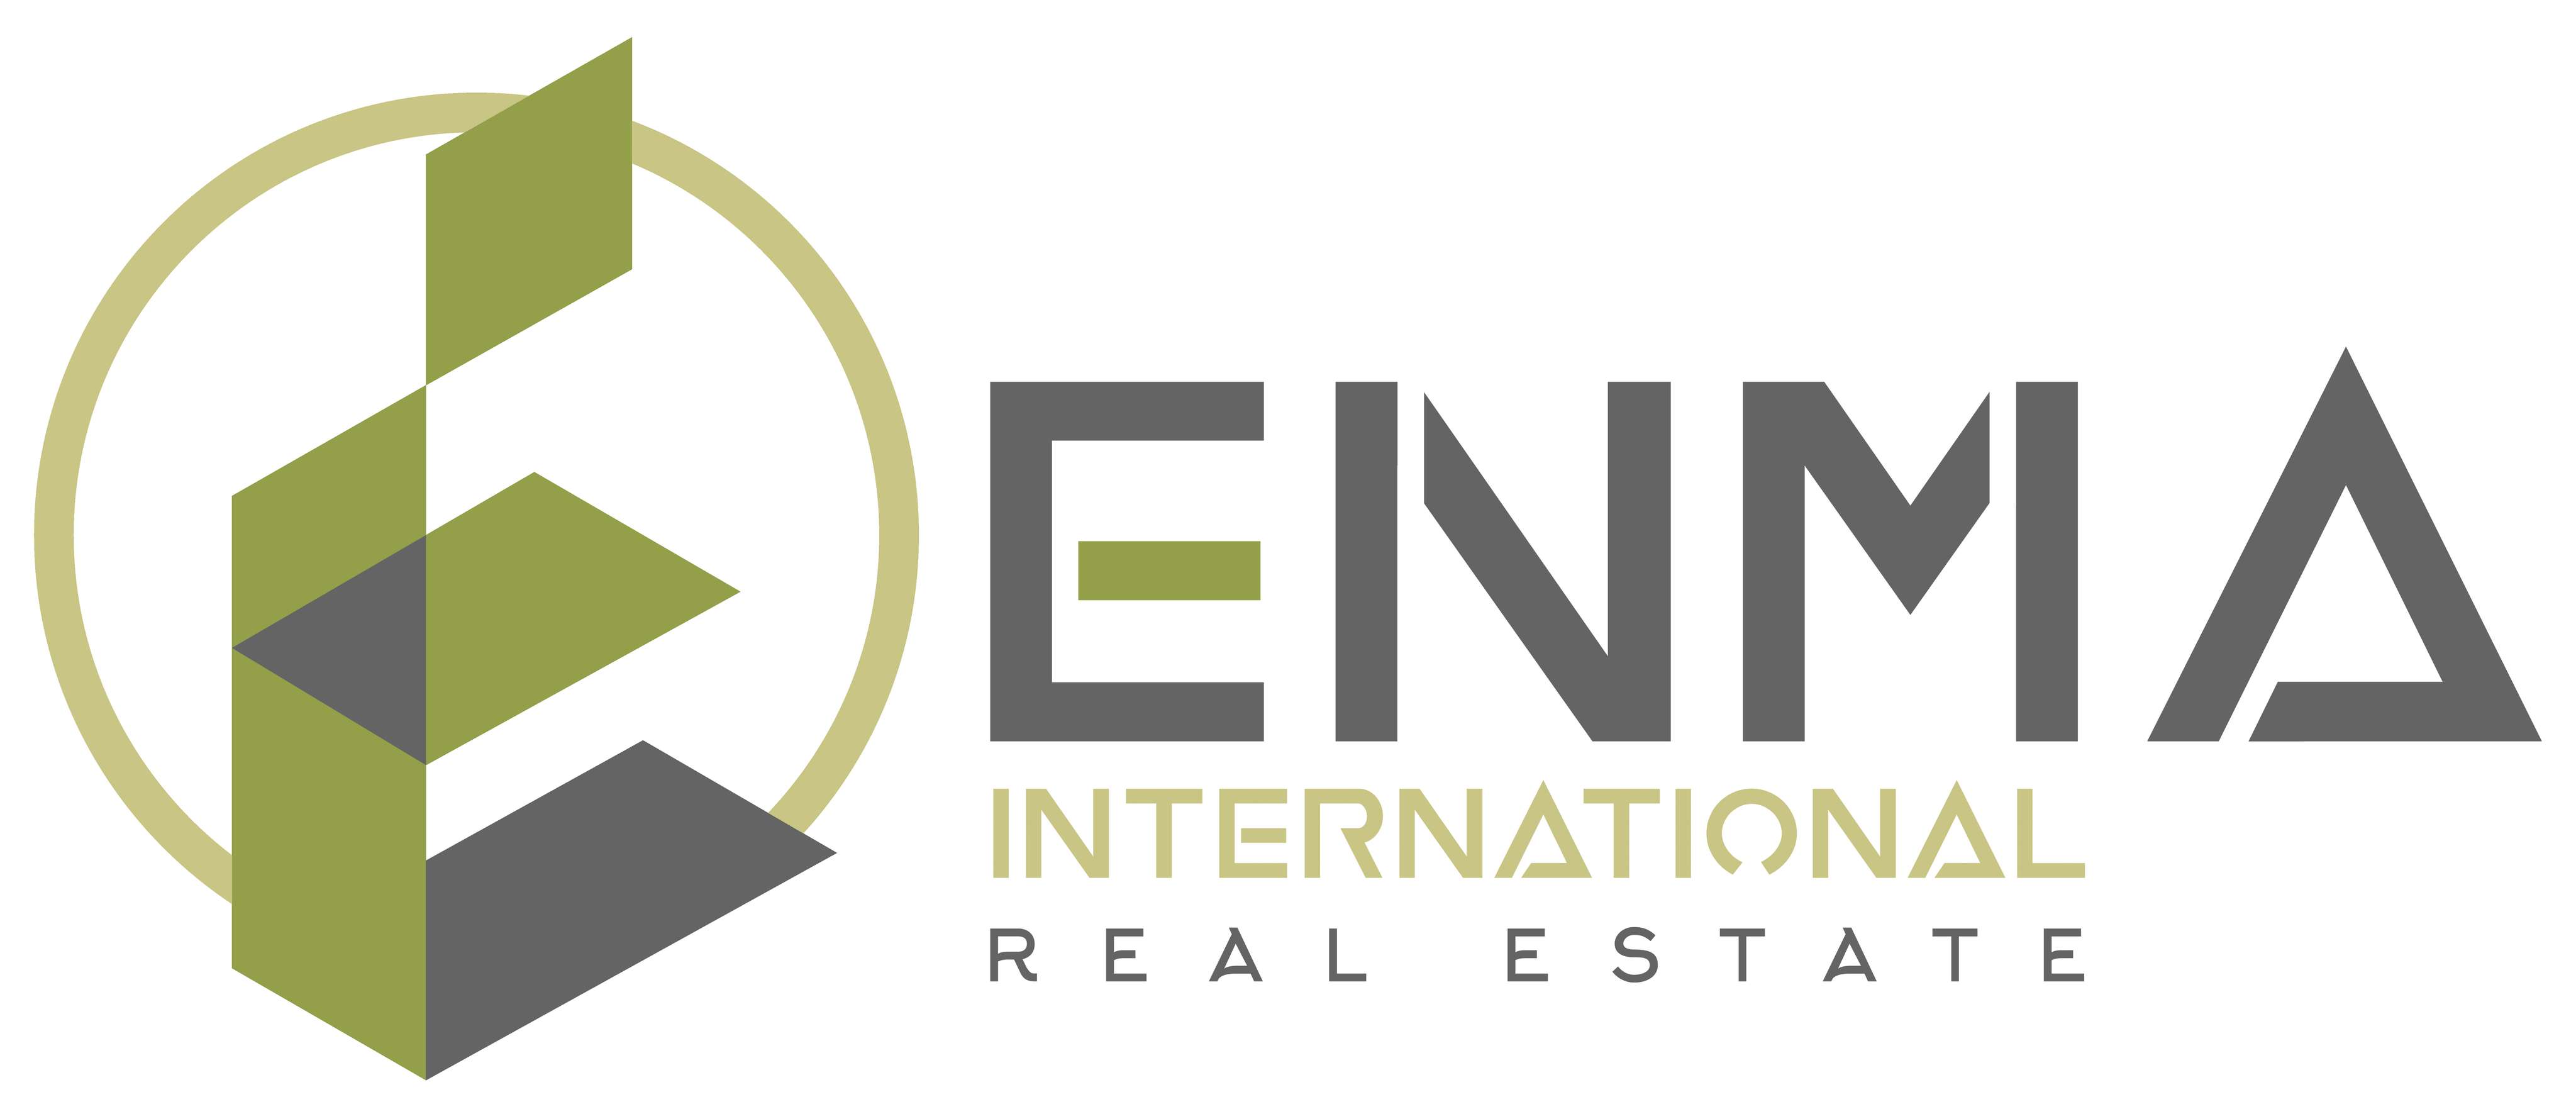 ENMA Ineternational Real Estate